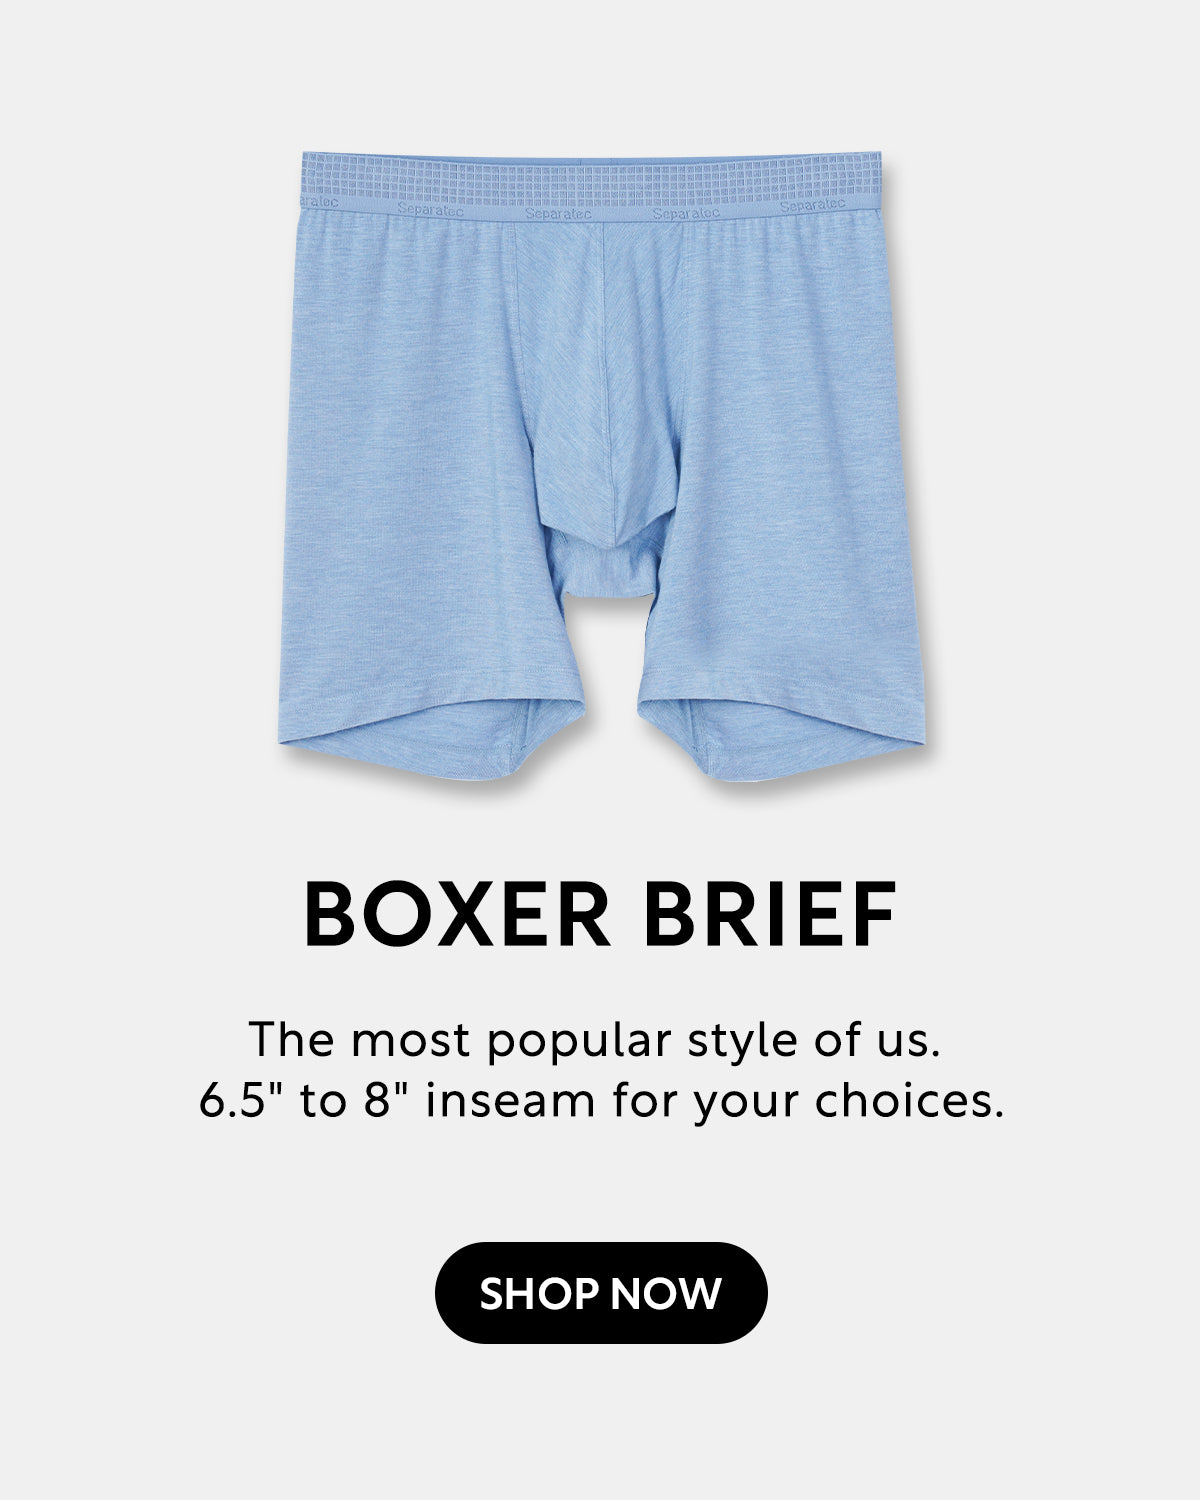 Separatec Men's High-end Micro Modal Dual Pouch Boxer Briefs Underwear -  Separatec-CA